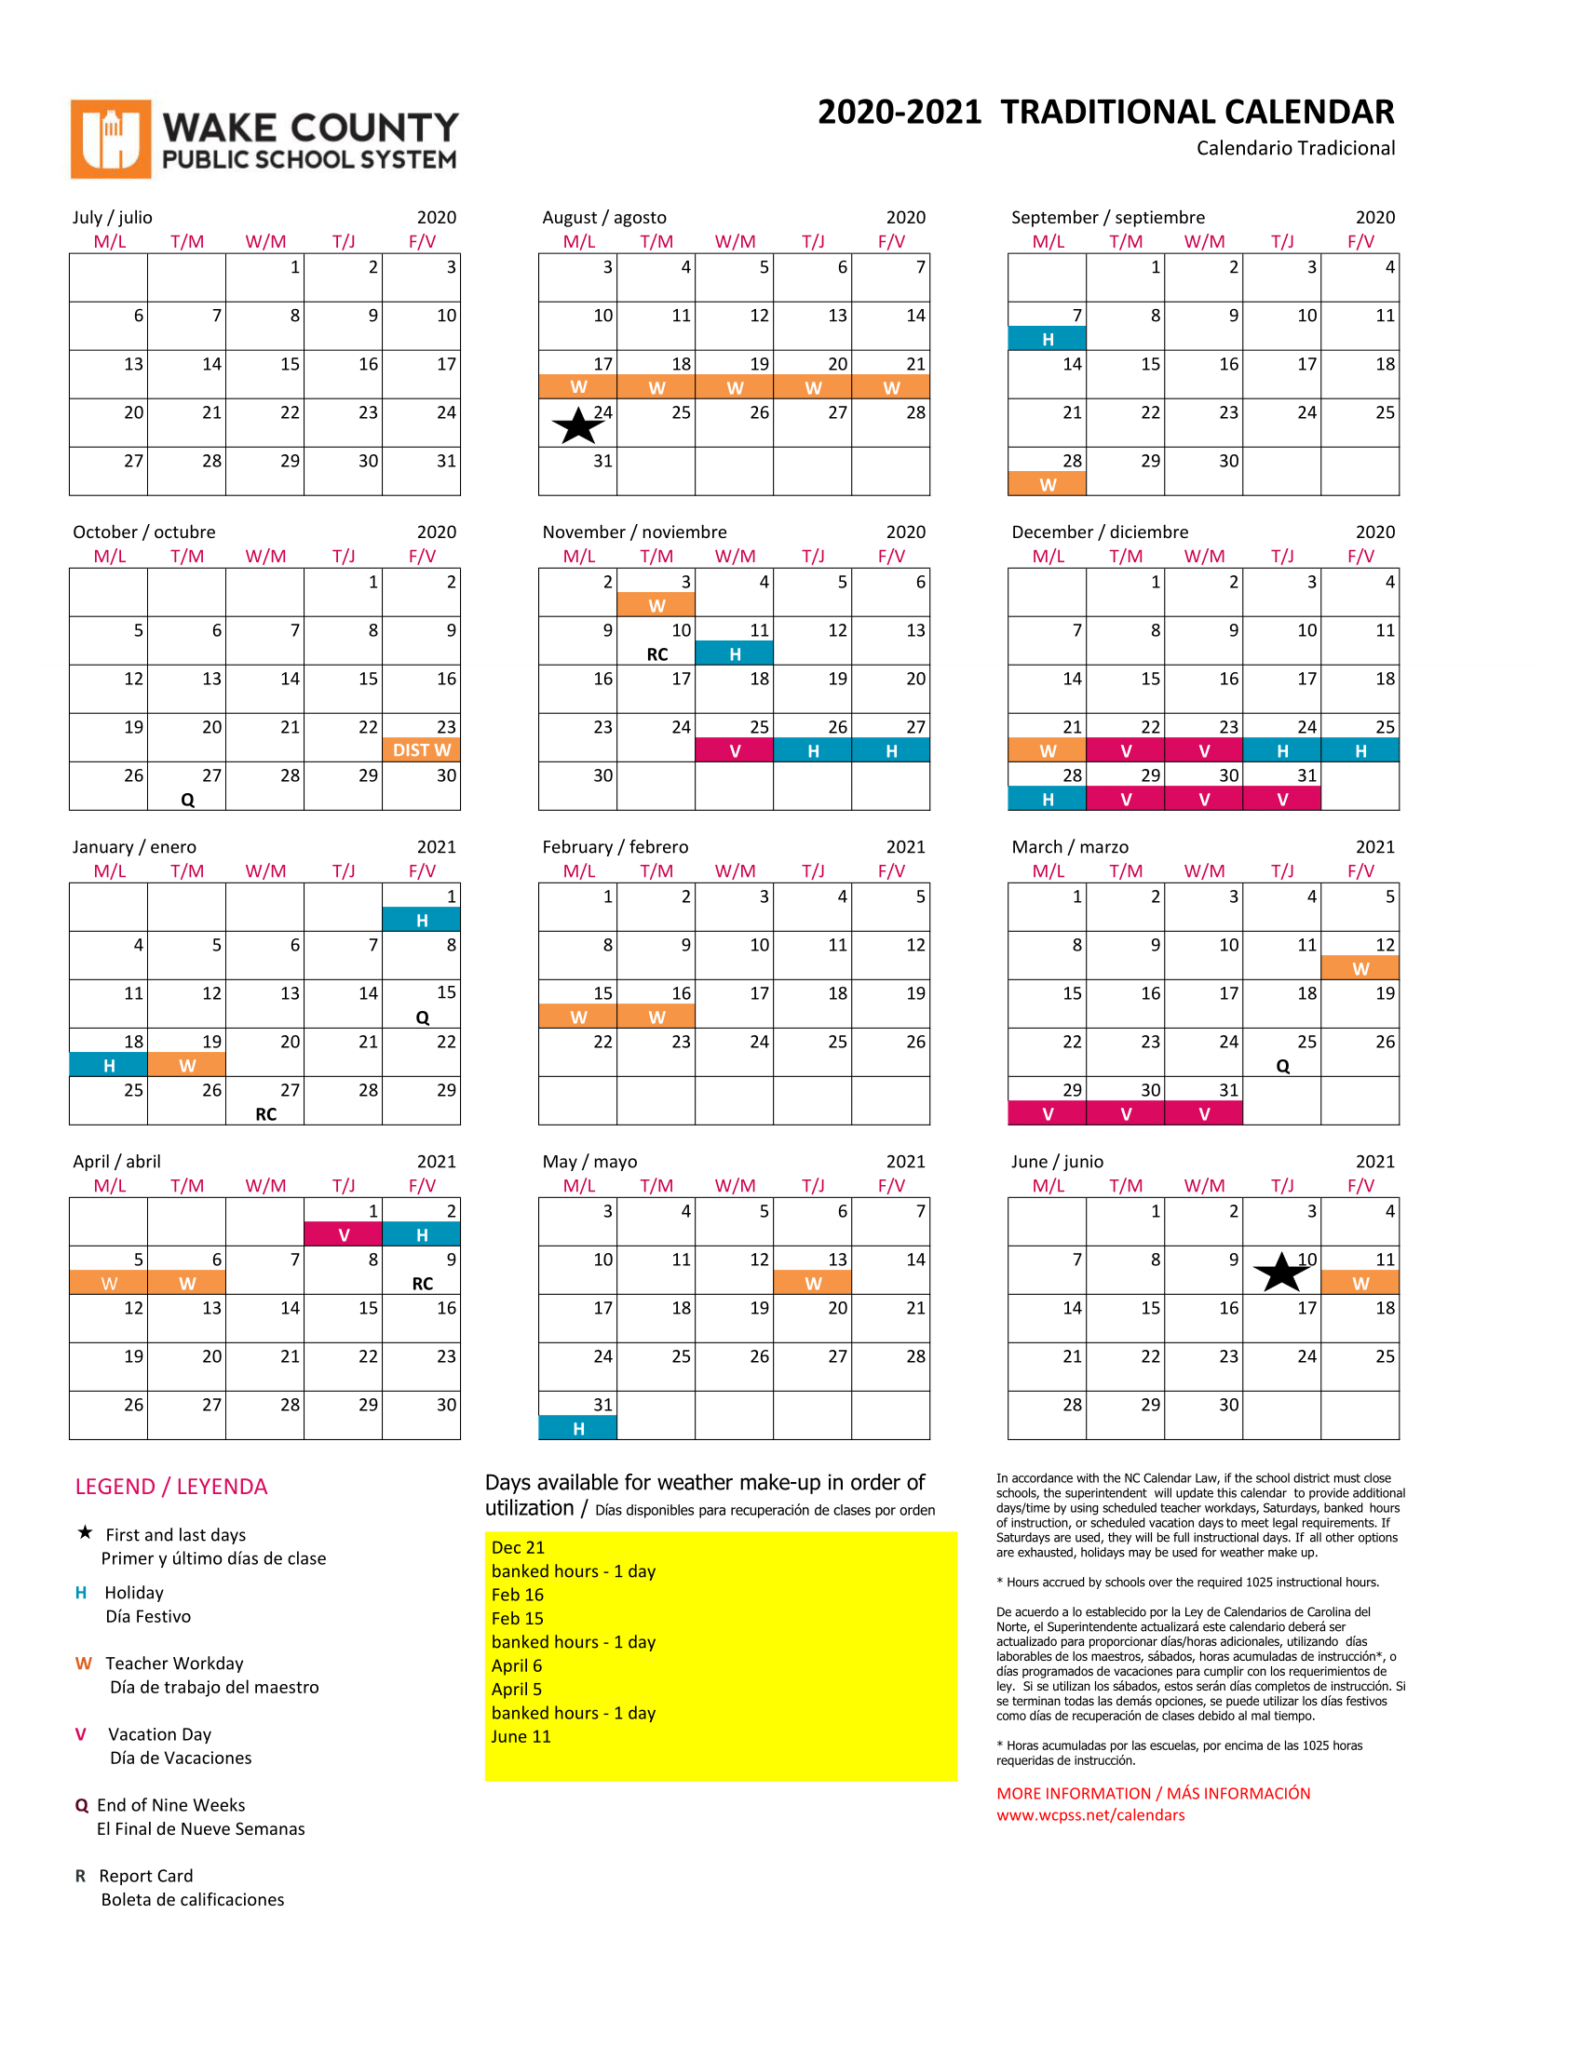 Wake County Public School Calendar | County School Calendar